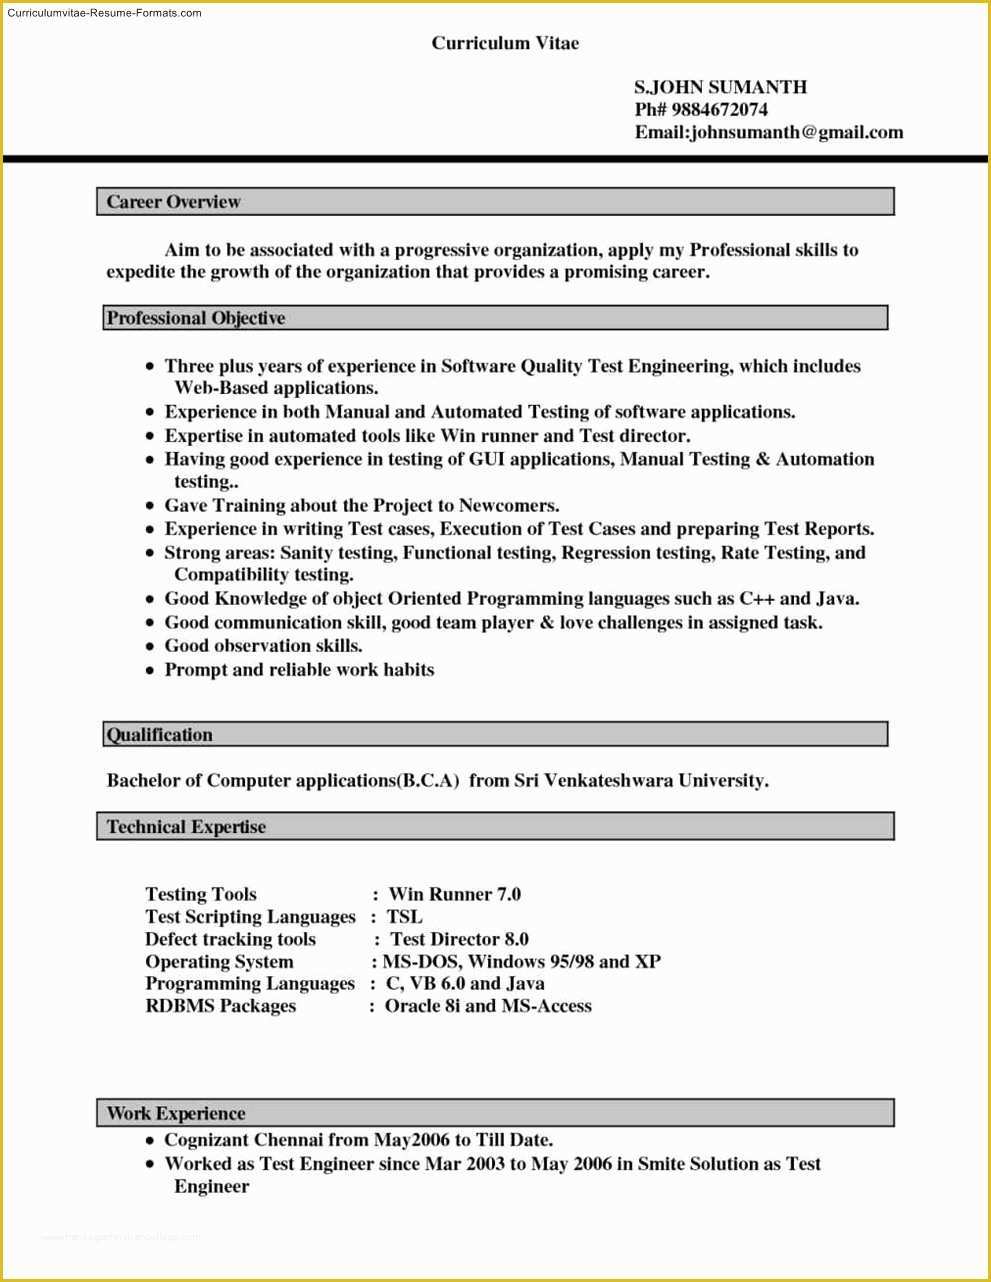 Free Professional Resume Templates Microsoft Word Of Free Resume Templates for Microsoft Word 2007 Free